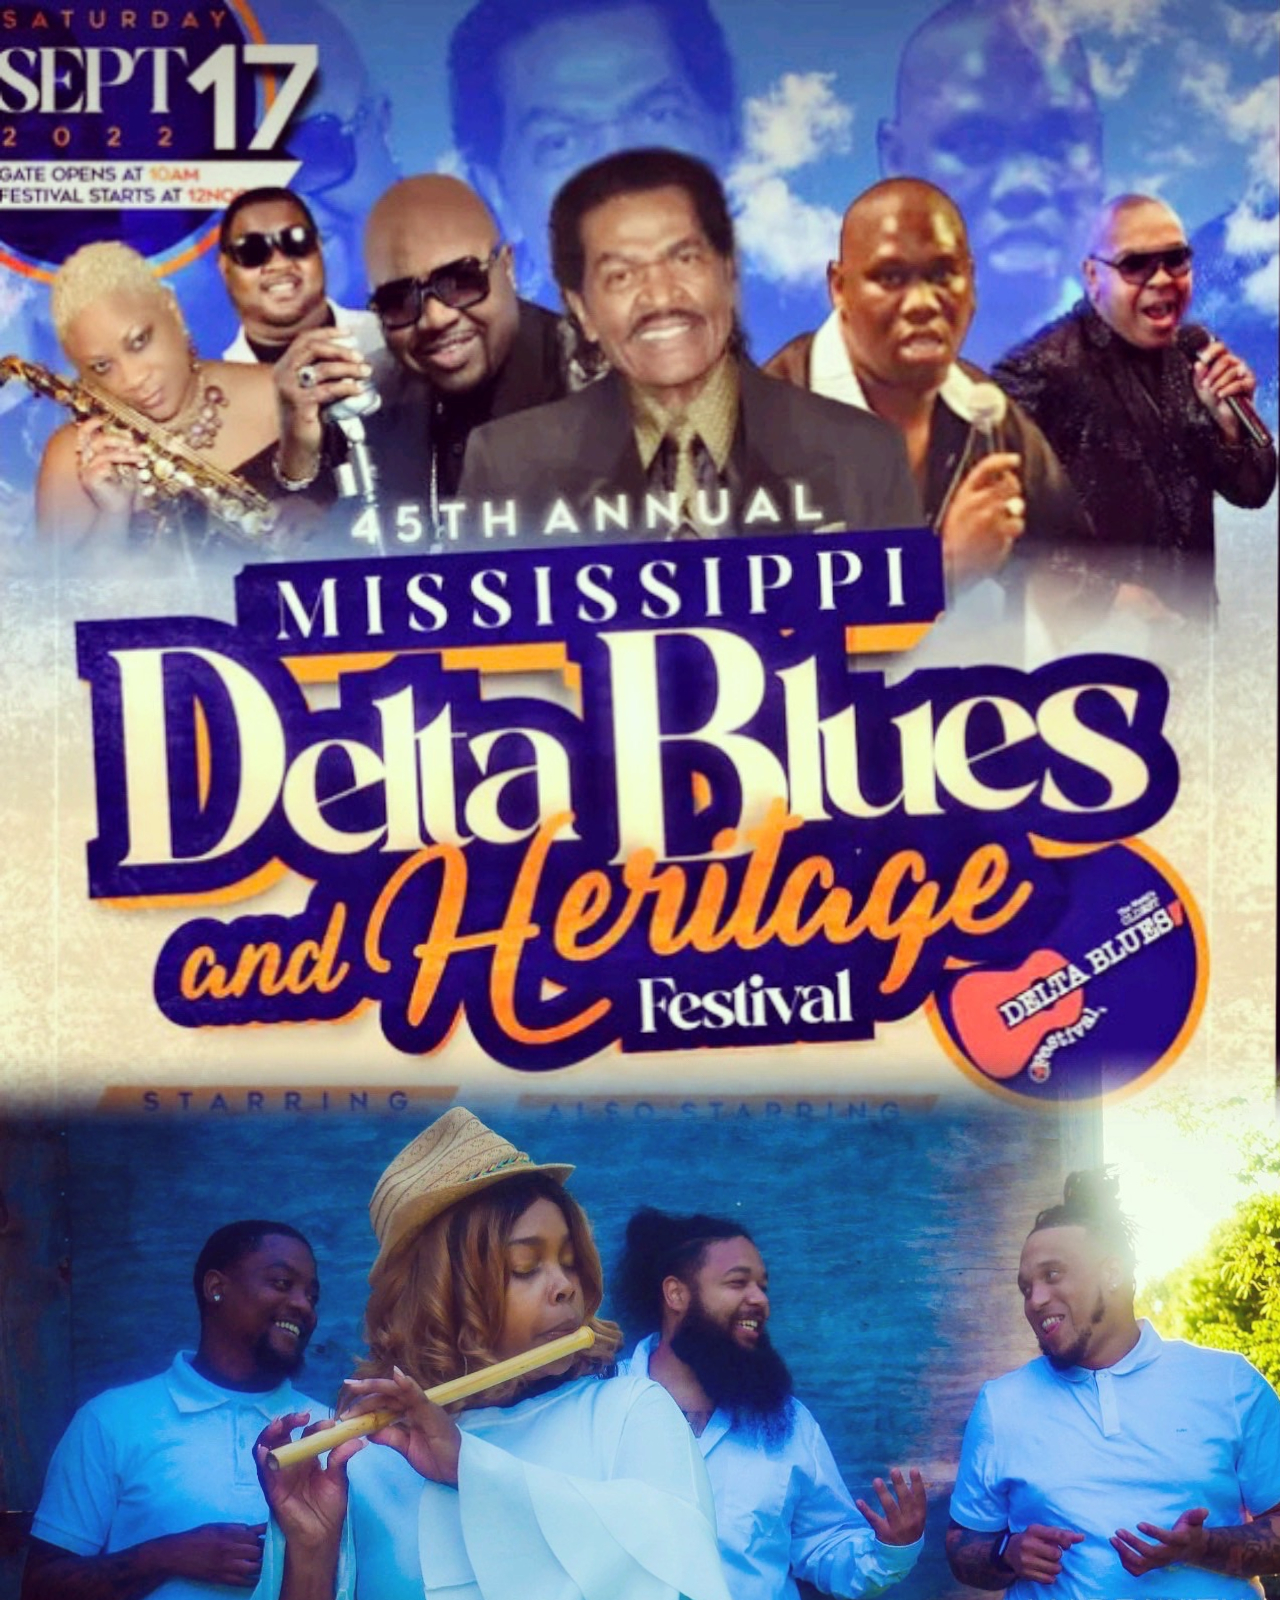 Sept 17, 2022 Greenville, MS Delta Blues & Heritage Festival G.O.A